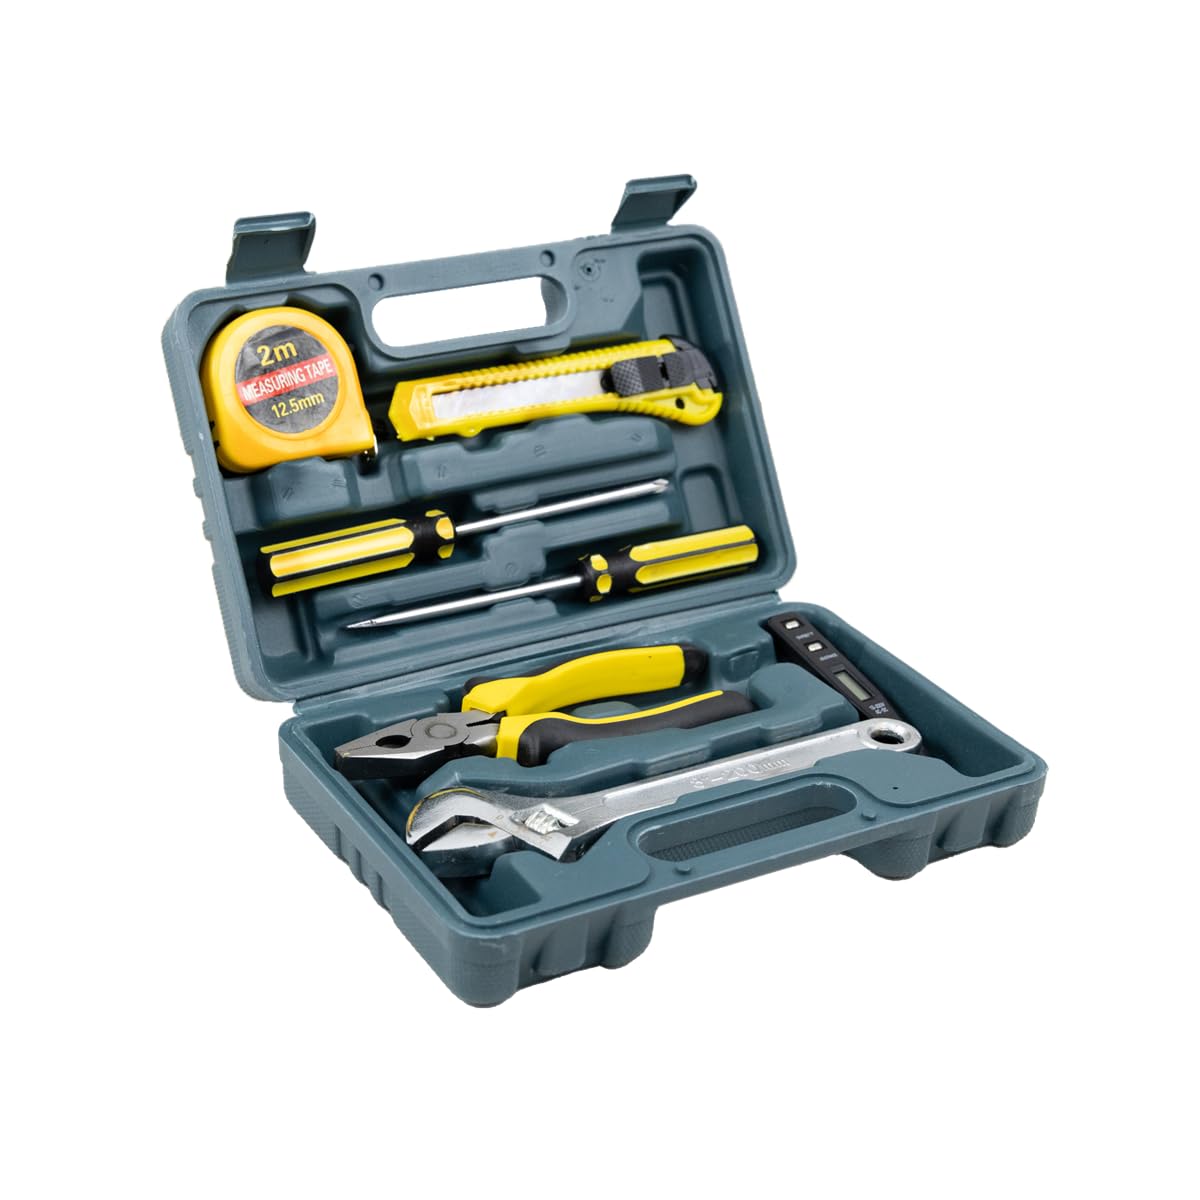 Aegon 7 Pcs Hand Tool Set - Adjustable Spanner, Star Screwdriver, Flathead Screwdriver, Knife, Measuring Tape, Cutting Plier, and Voltage tester